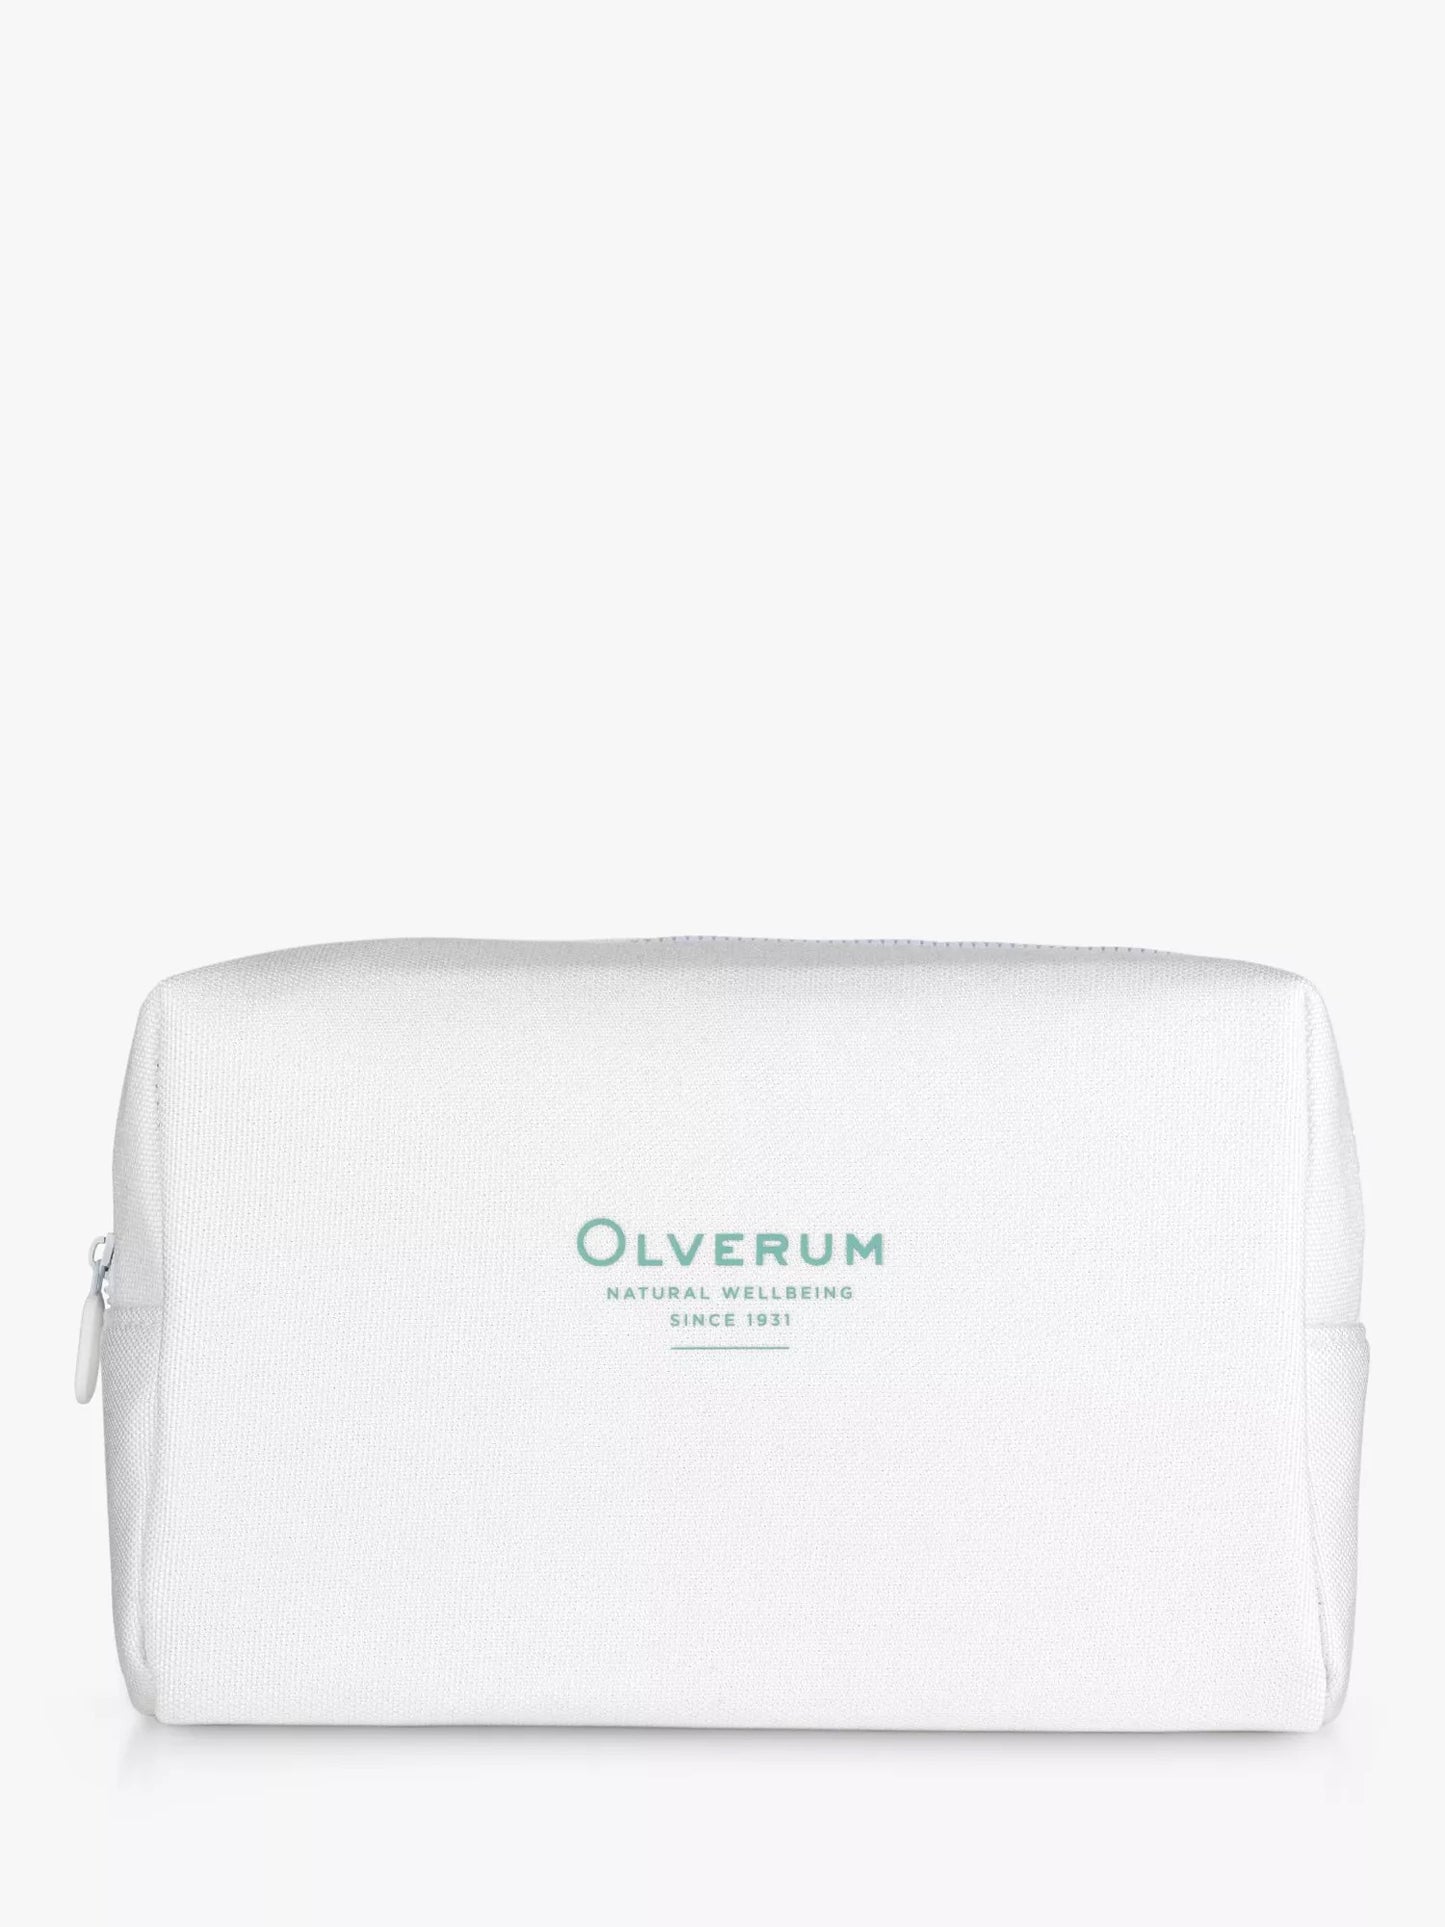 Olverum Sleep Ritual Bodycare Gift Set